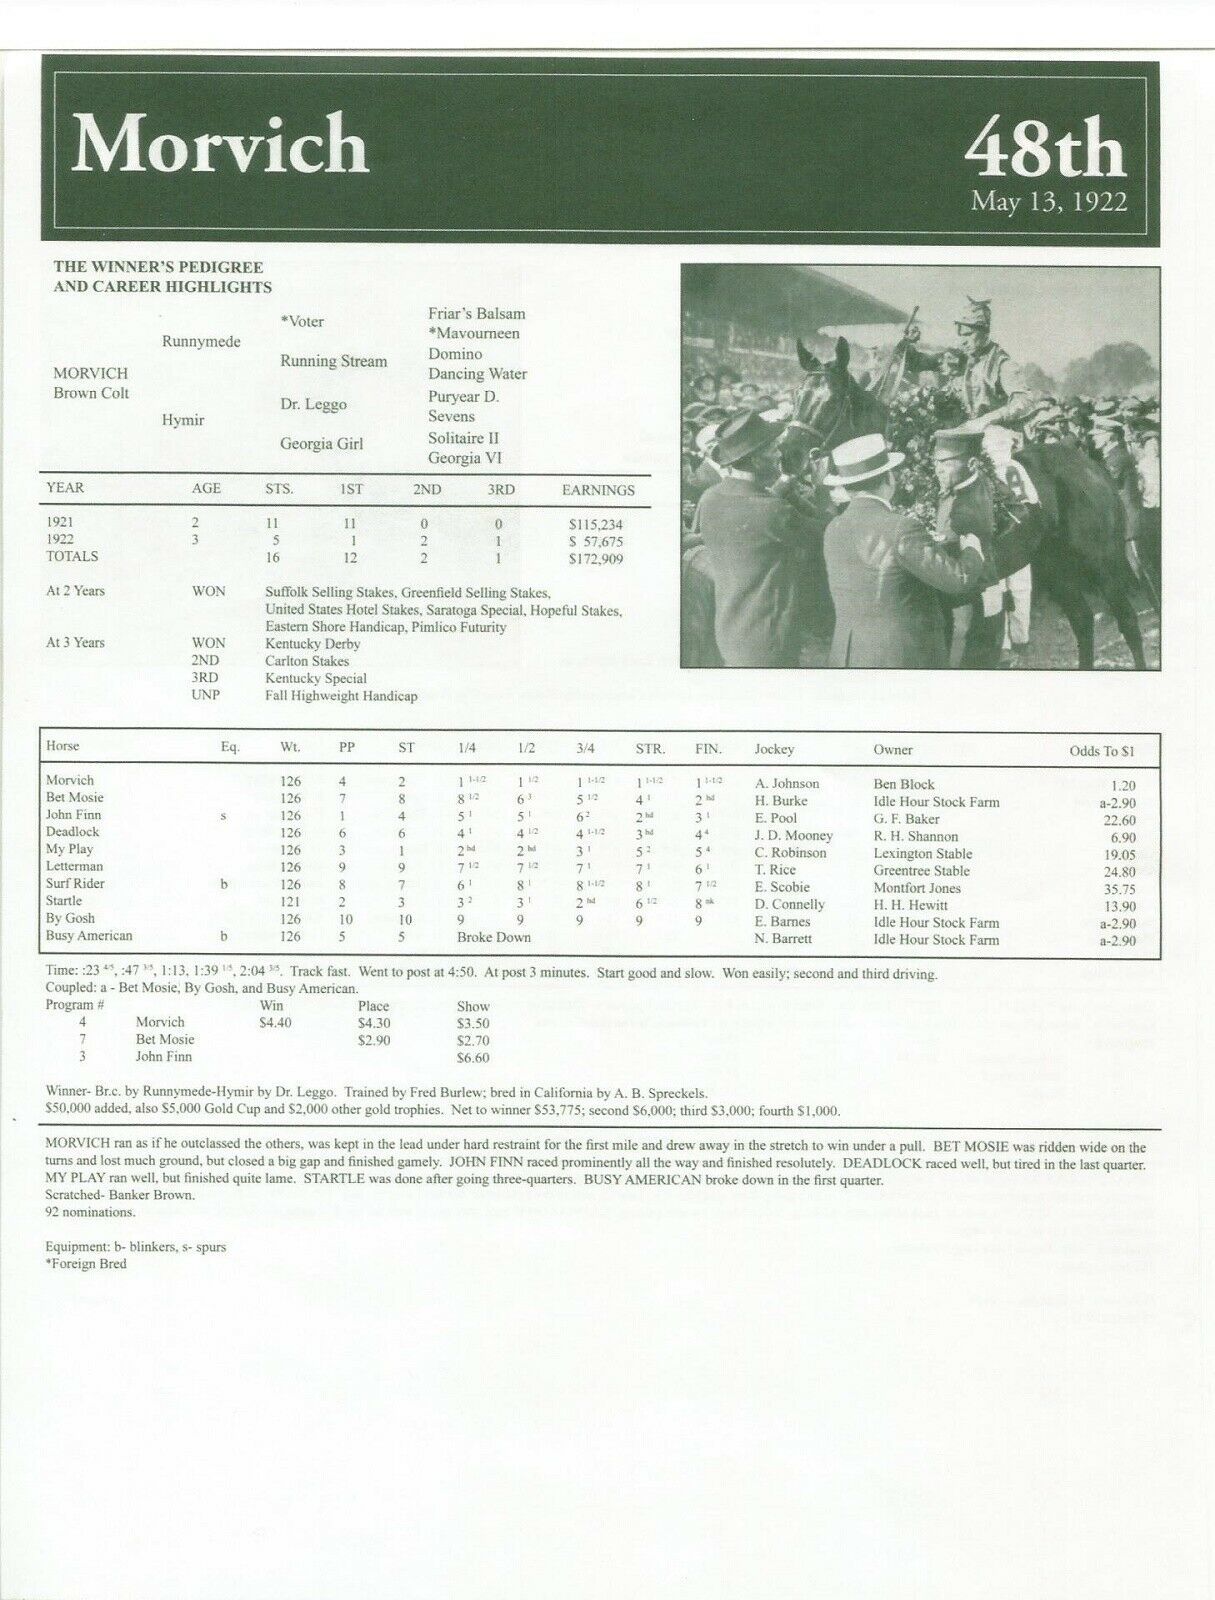 1922 MORVICH Kentucky Derby Race Chart, Pedigree & Career